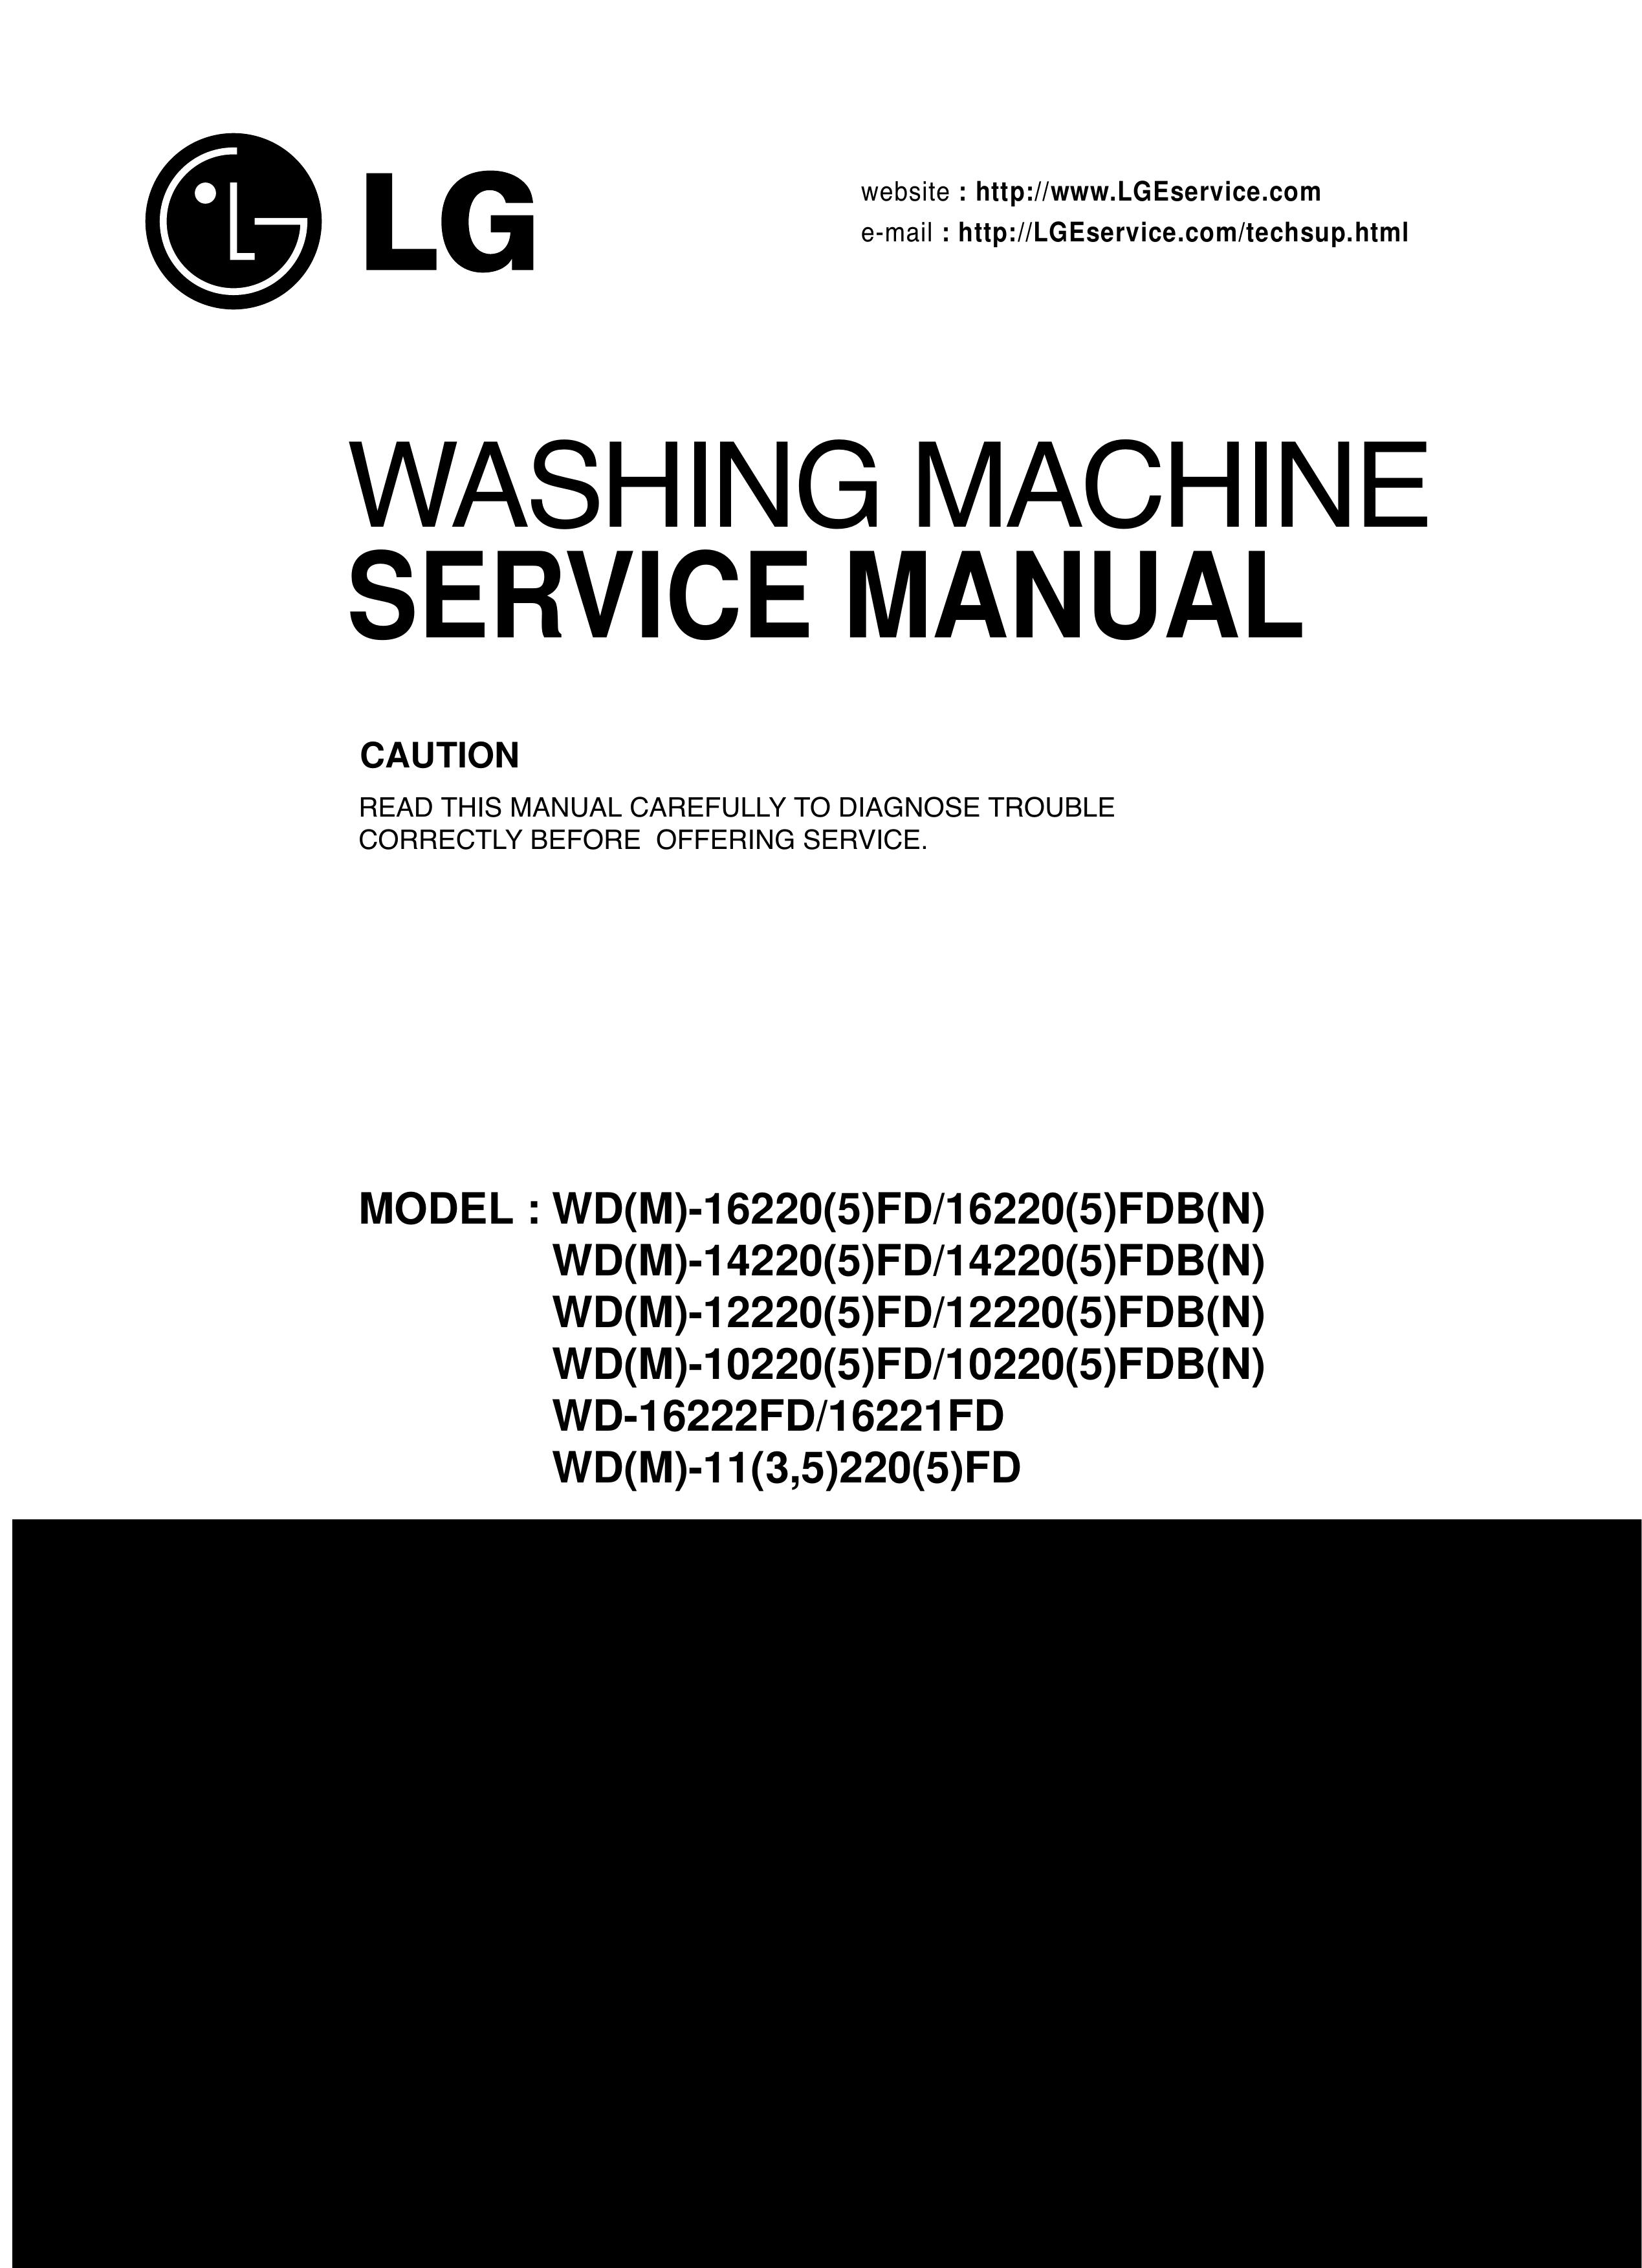 LG Electronics 14220(5)FDB(N) Washer User Manual